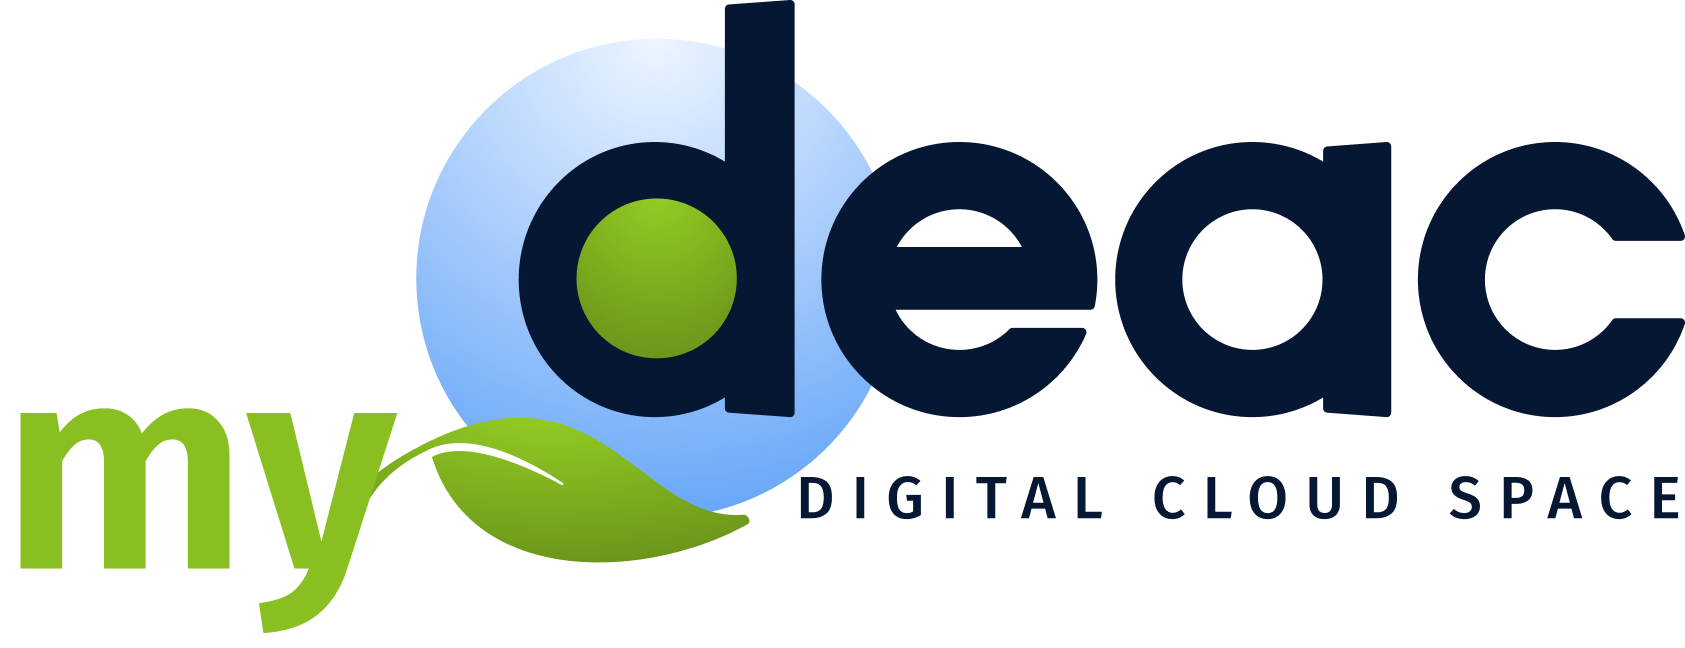 myDEAC cloud logo DEAC